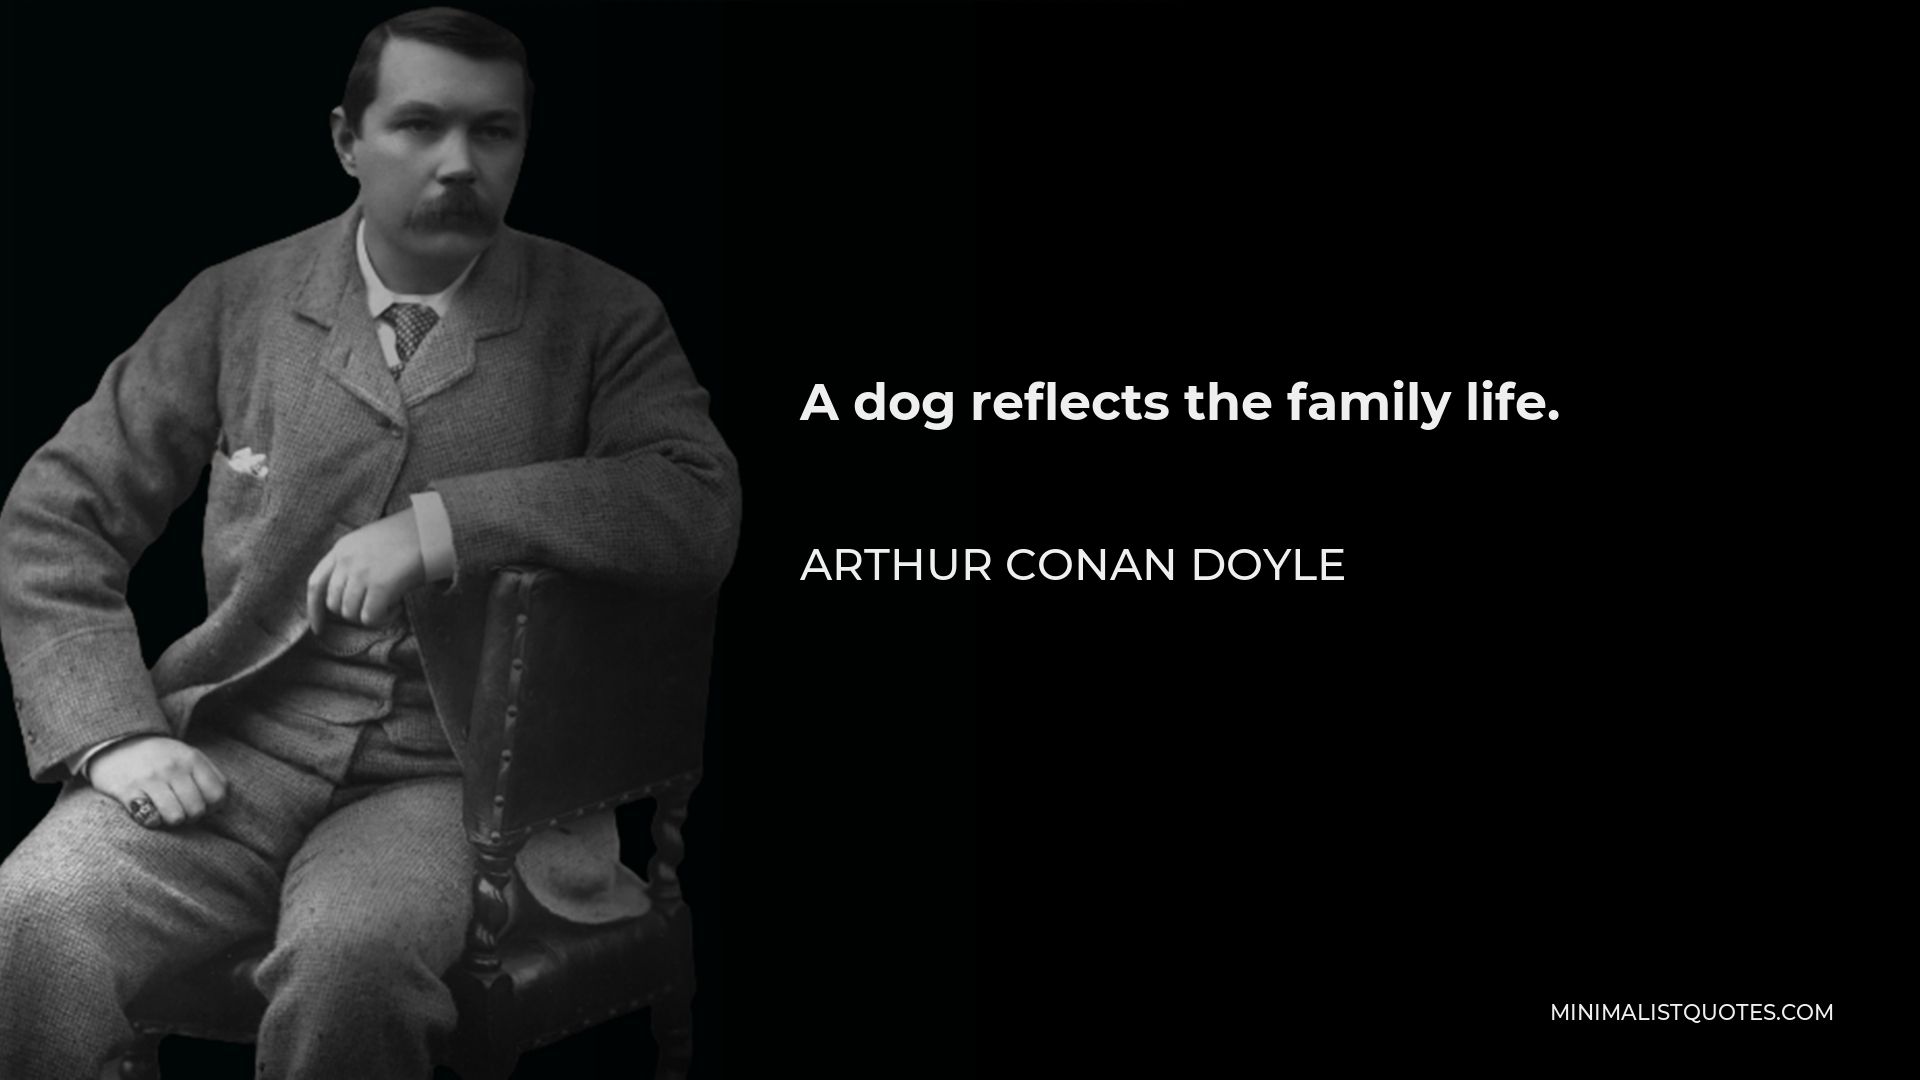 Arthur Conan Doyle Quote - A dog reflects the family life.